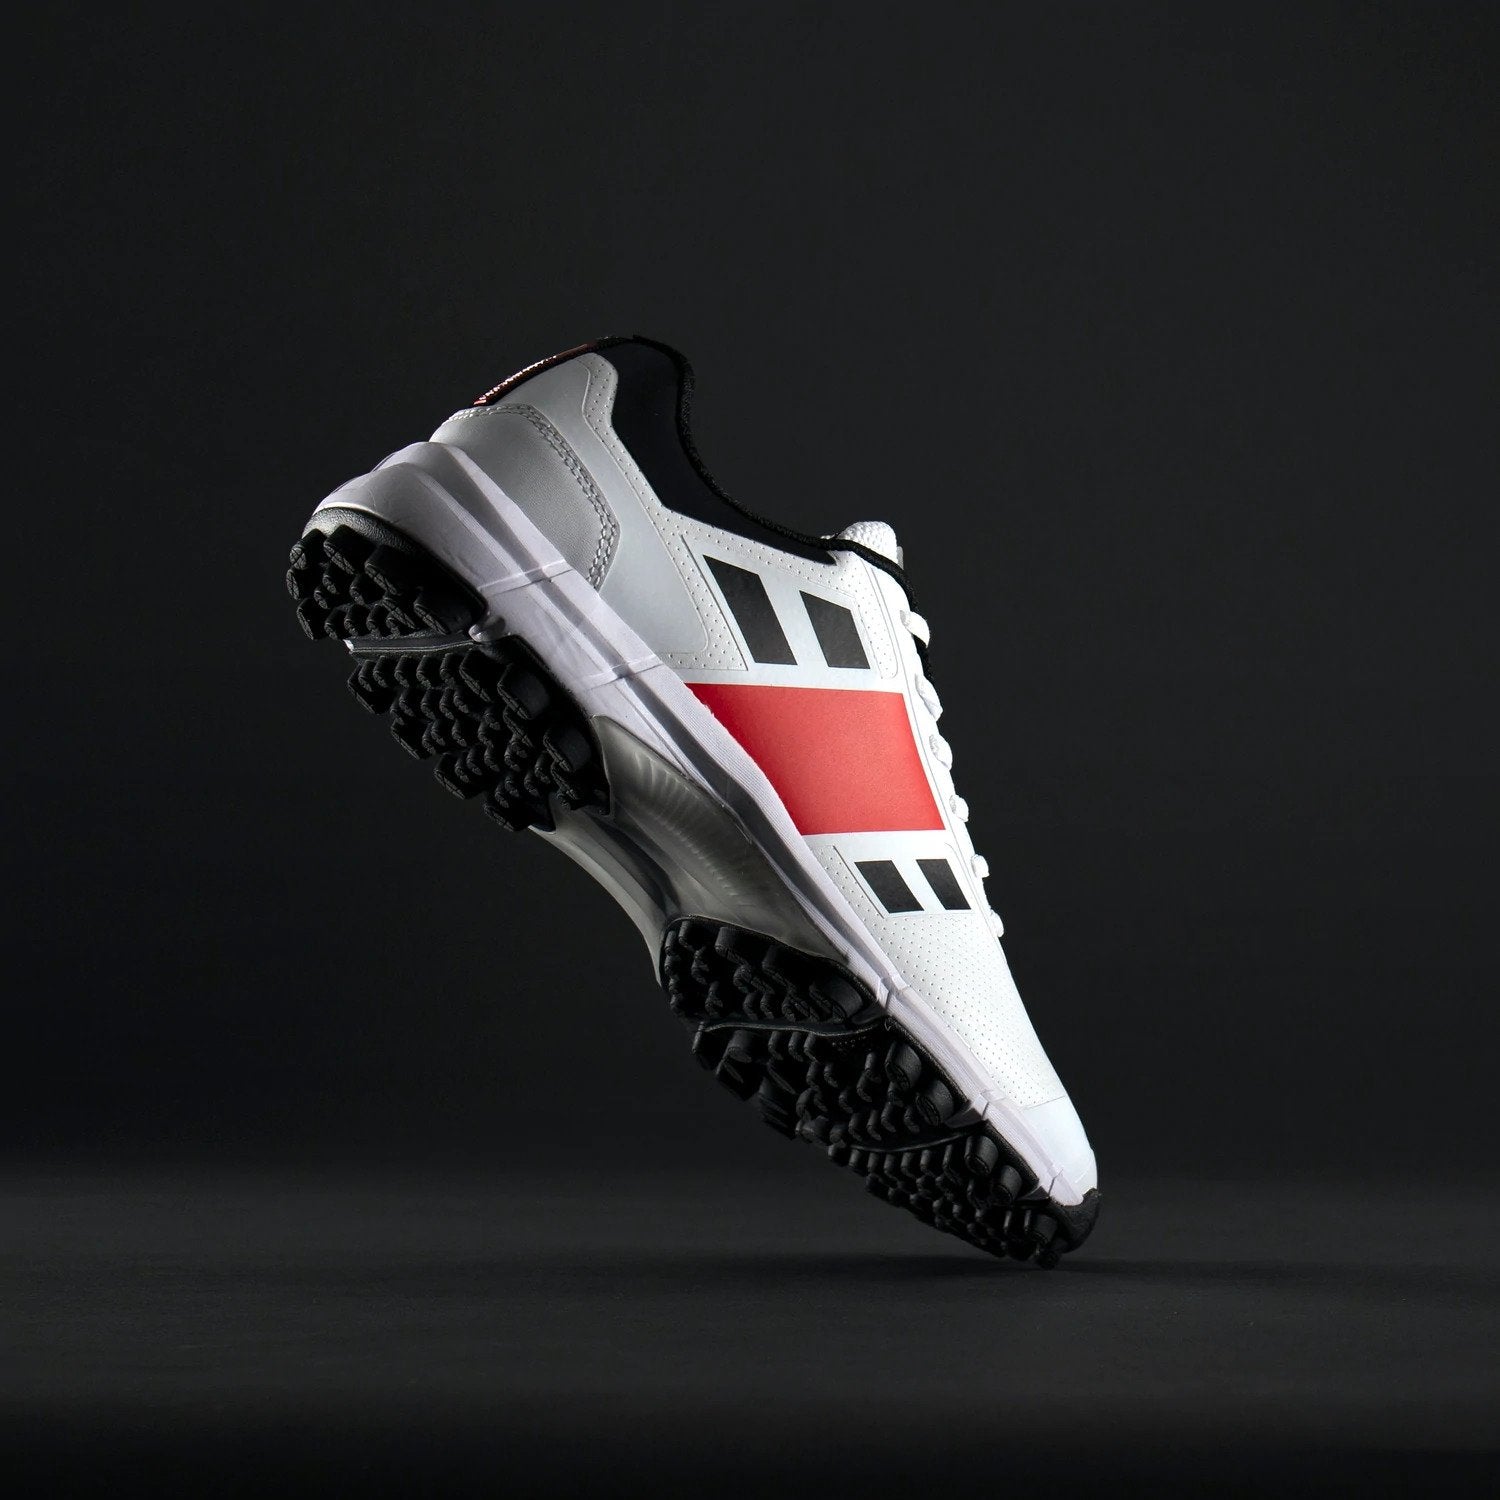 Gray Nicolls Velocity 3.0 Rubber Cricket Shoes